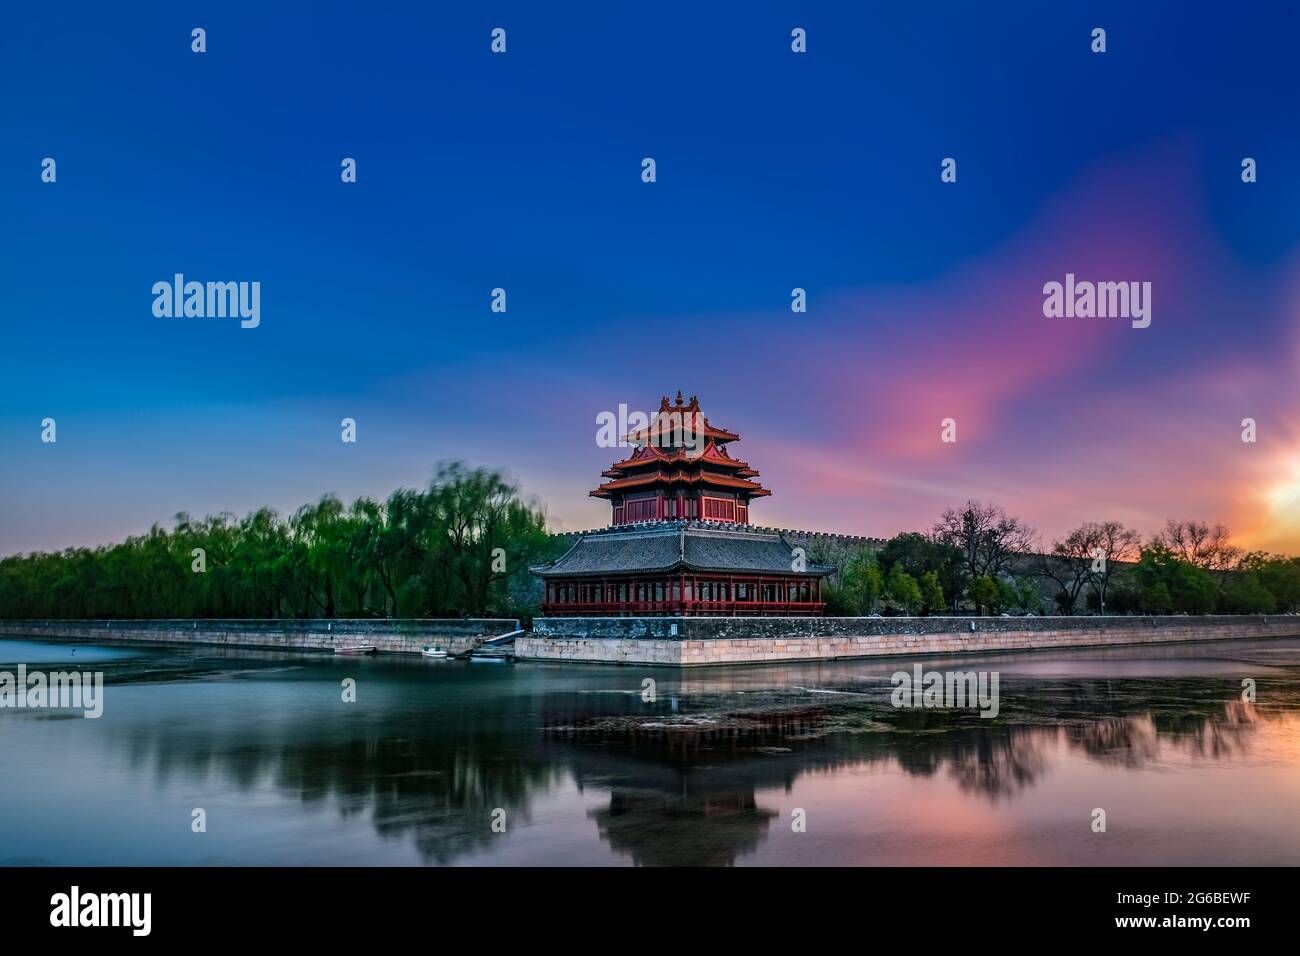 La torre de vigilancia de la ciudad prohibida Beijing China Foto de stock